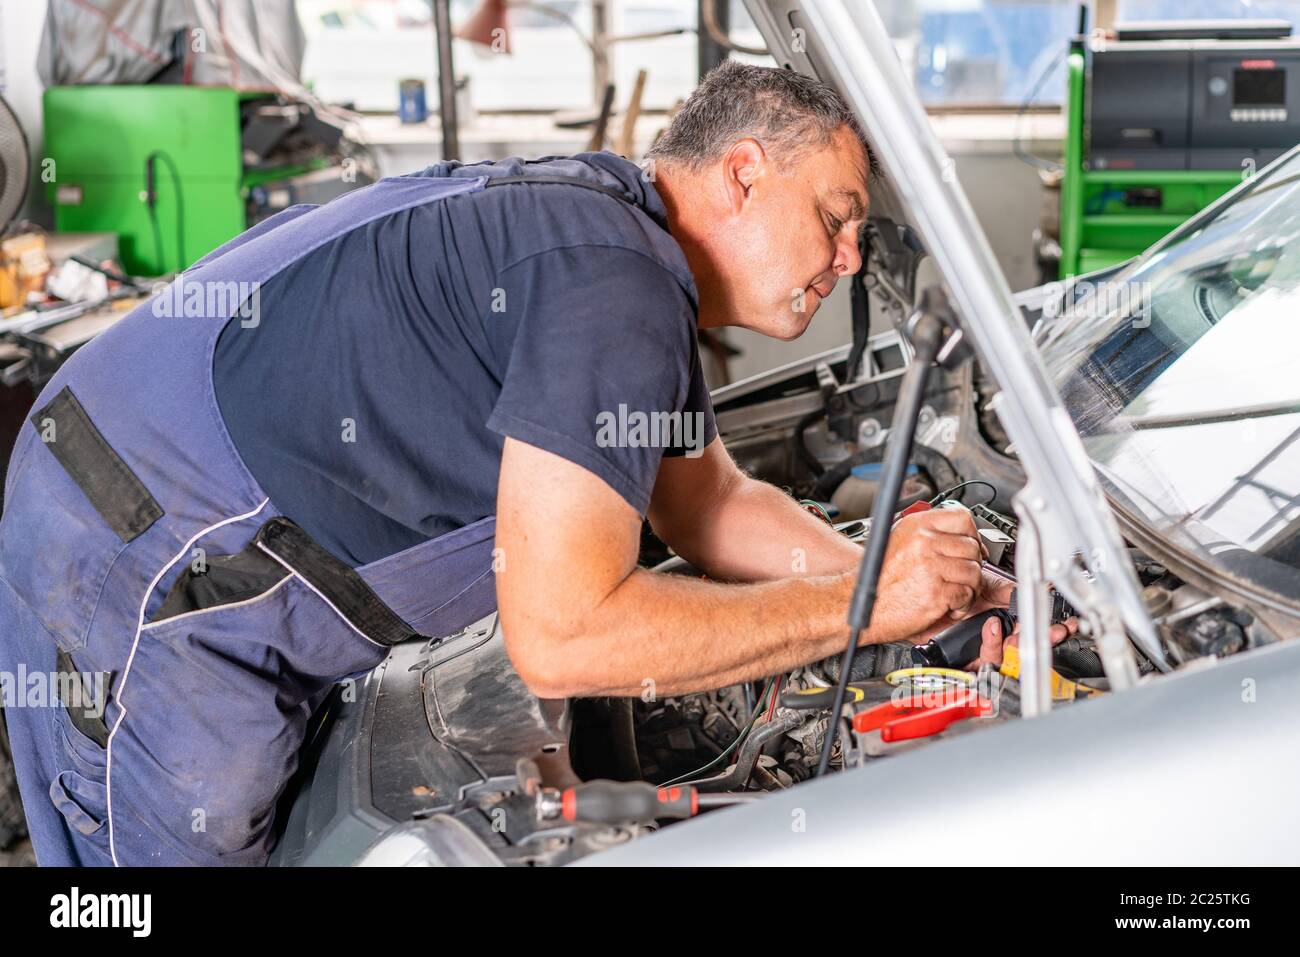 Repair shop electronics hi-res stock photography and images - Auto Mechanic Repairs Car 1 2C25TKG